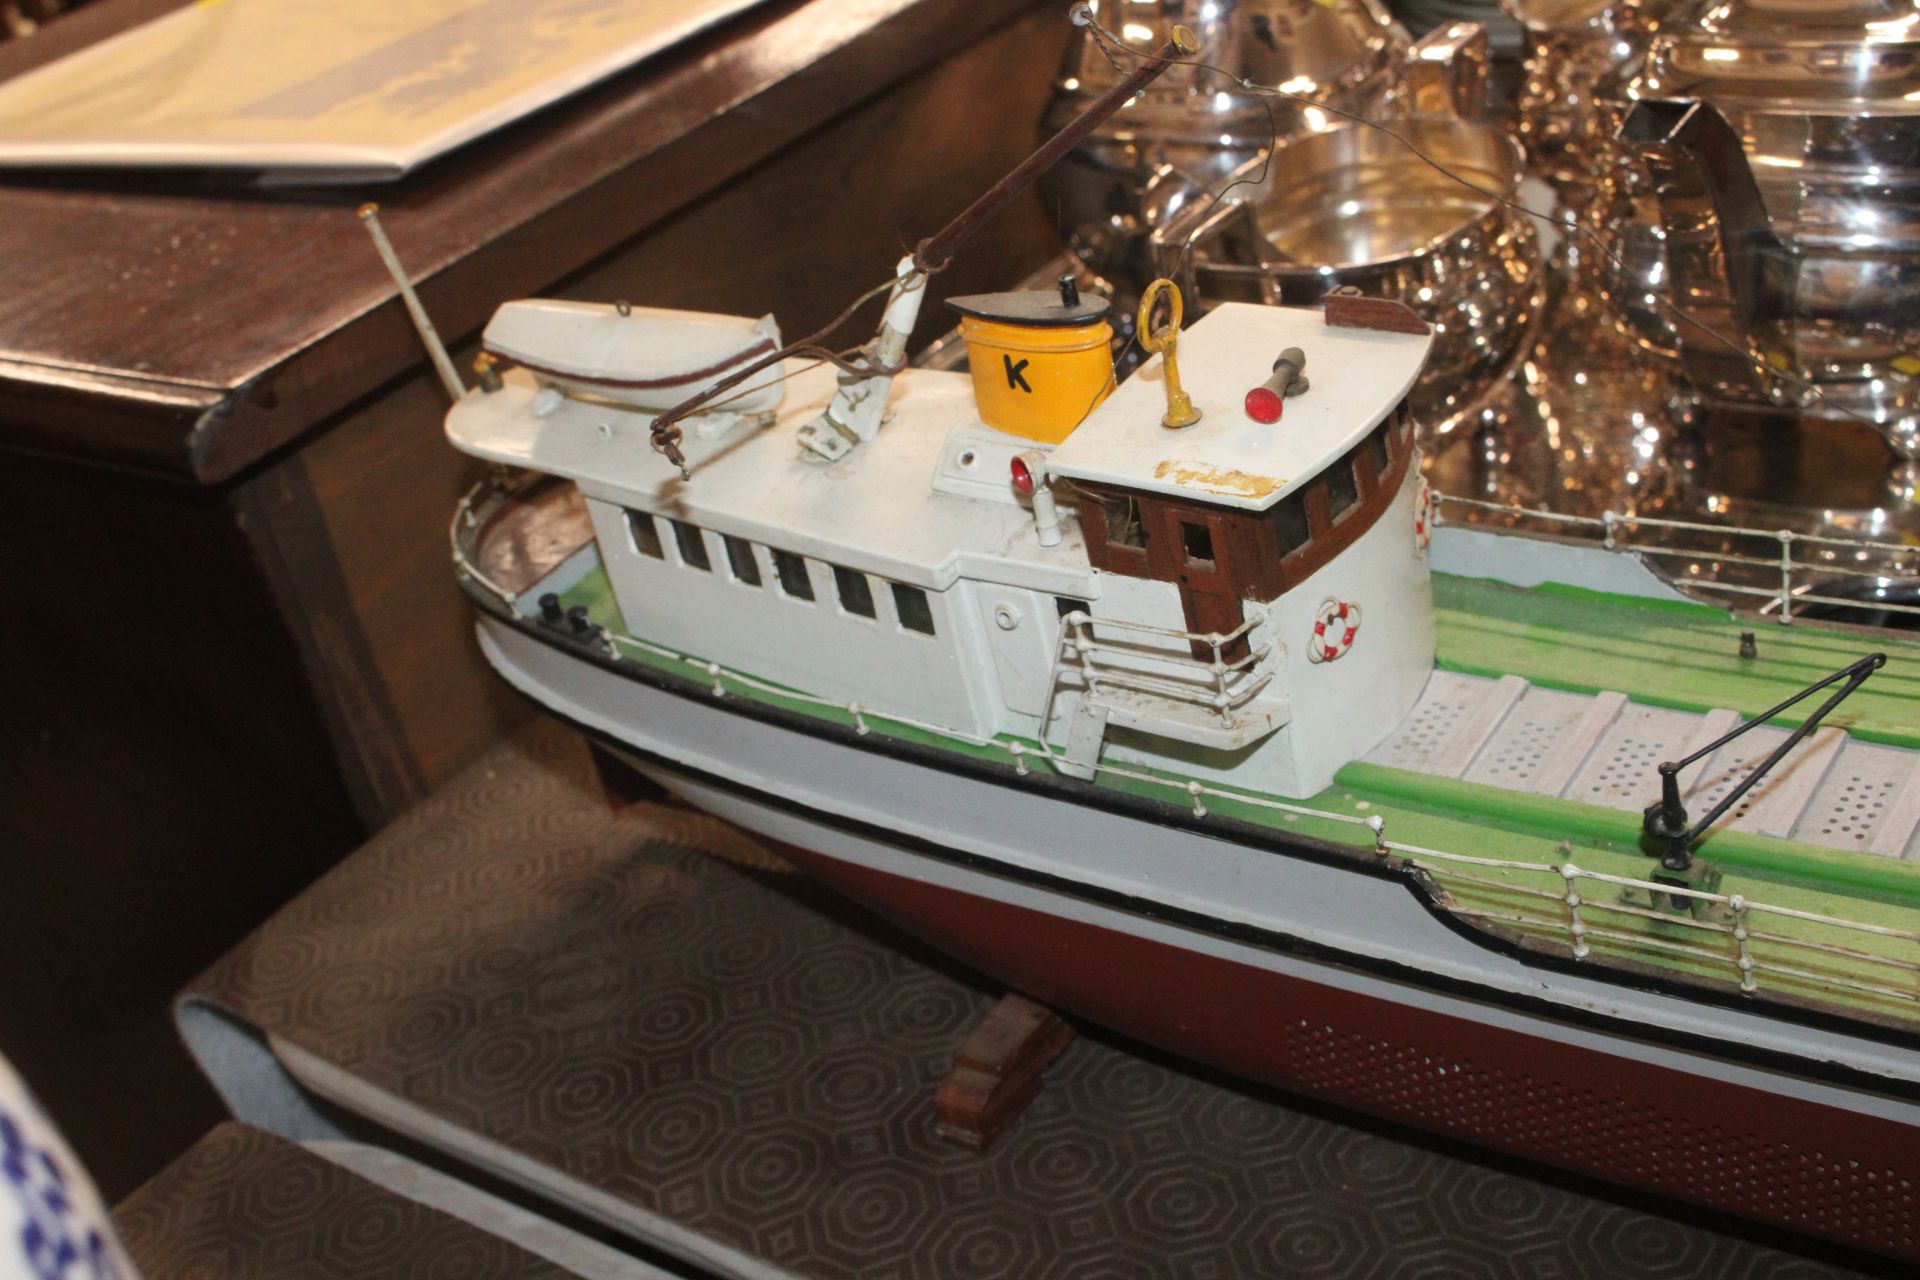 A model of the cargo ship "Peiter Geertruida" - Image 6 of 7